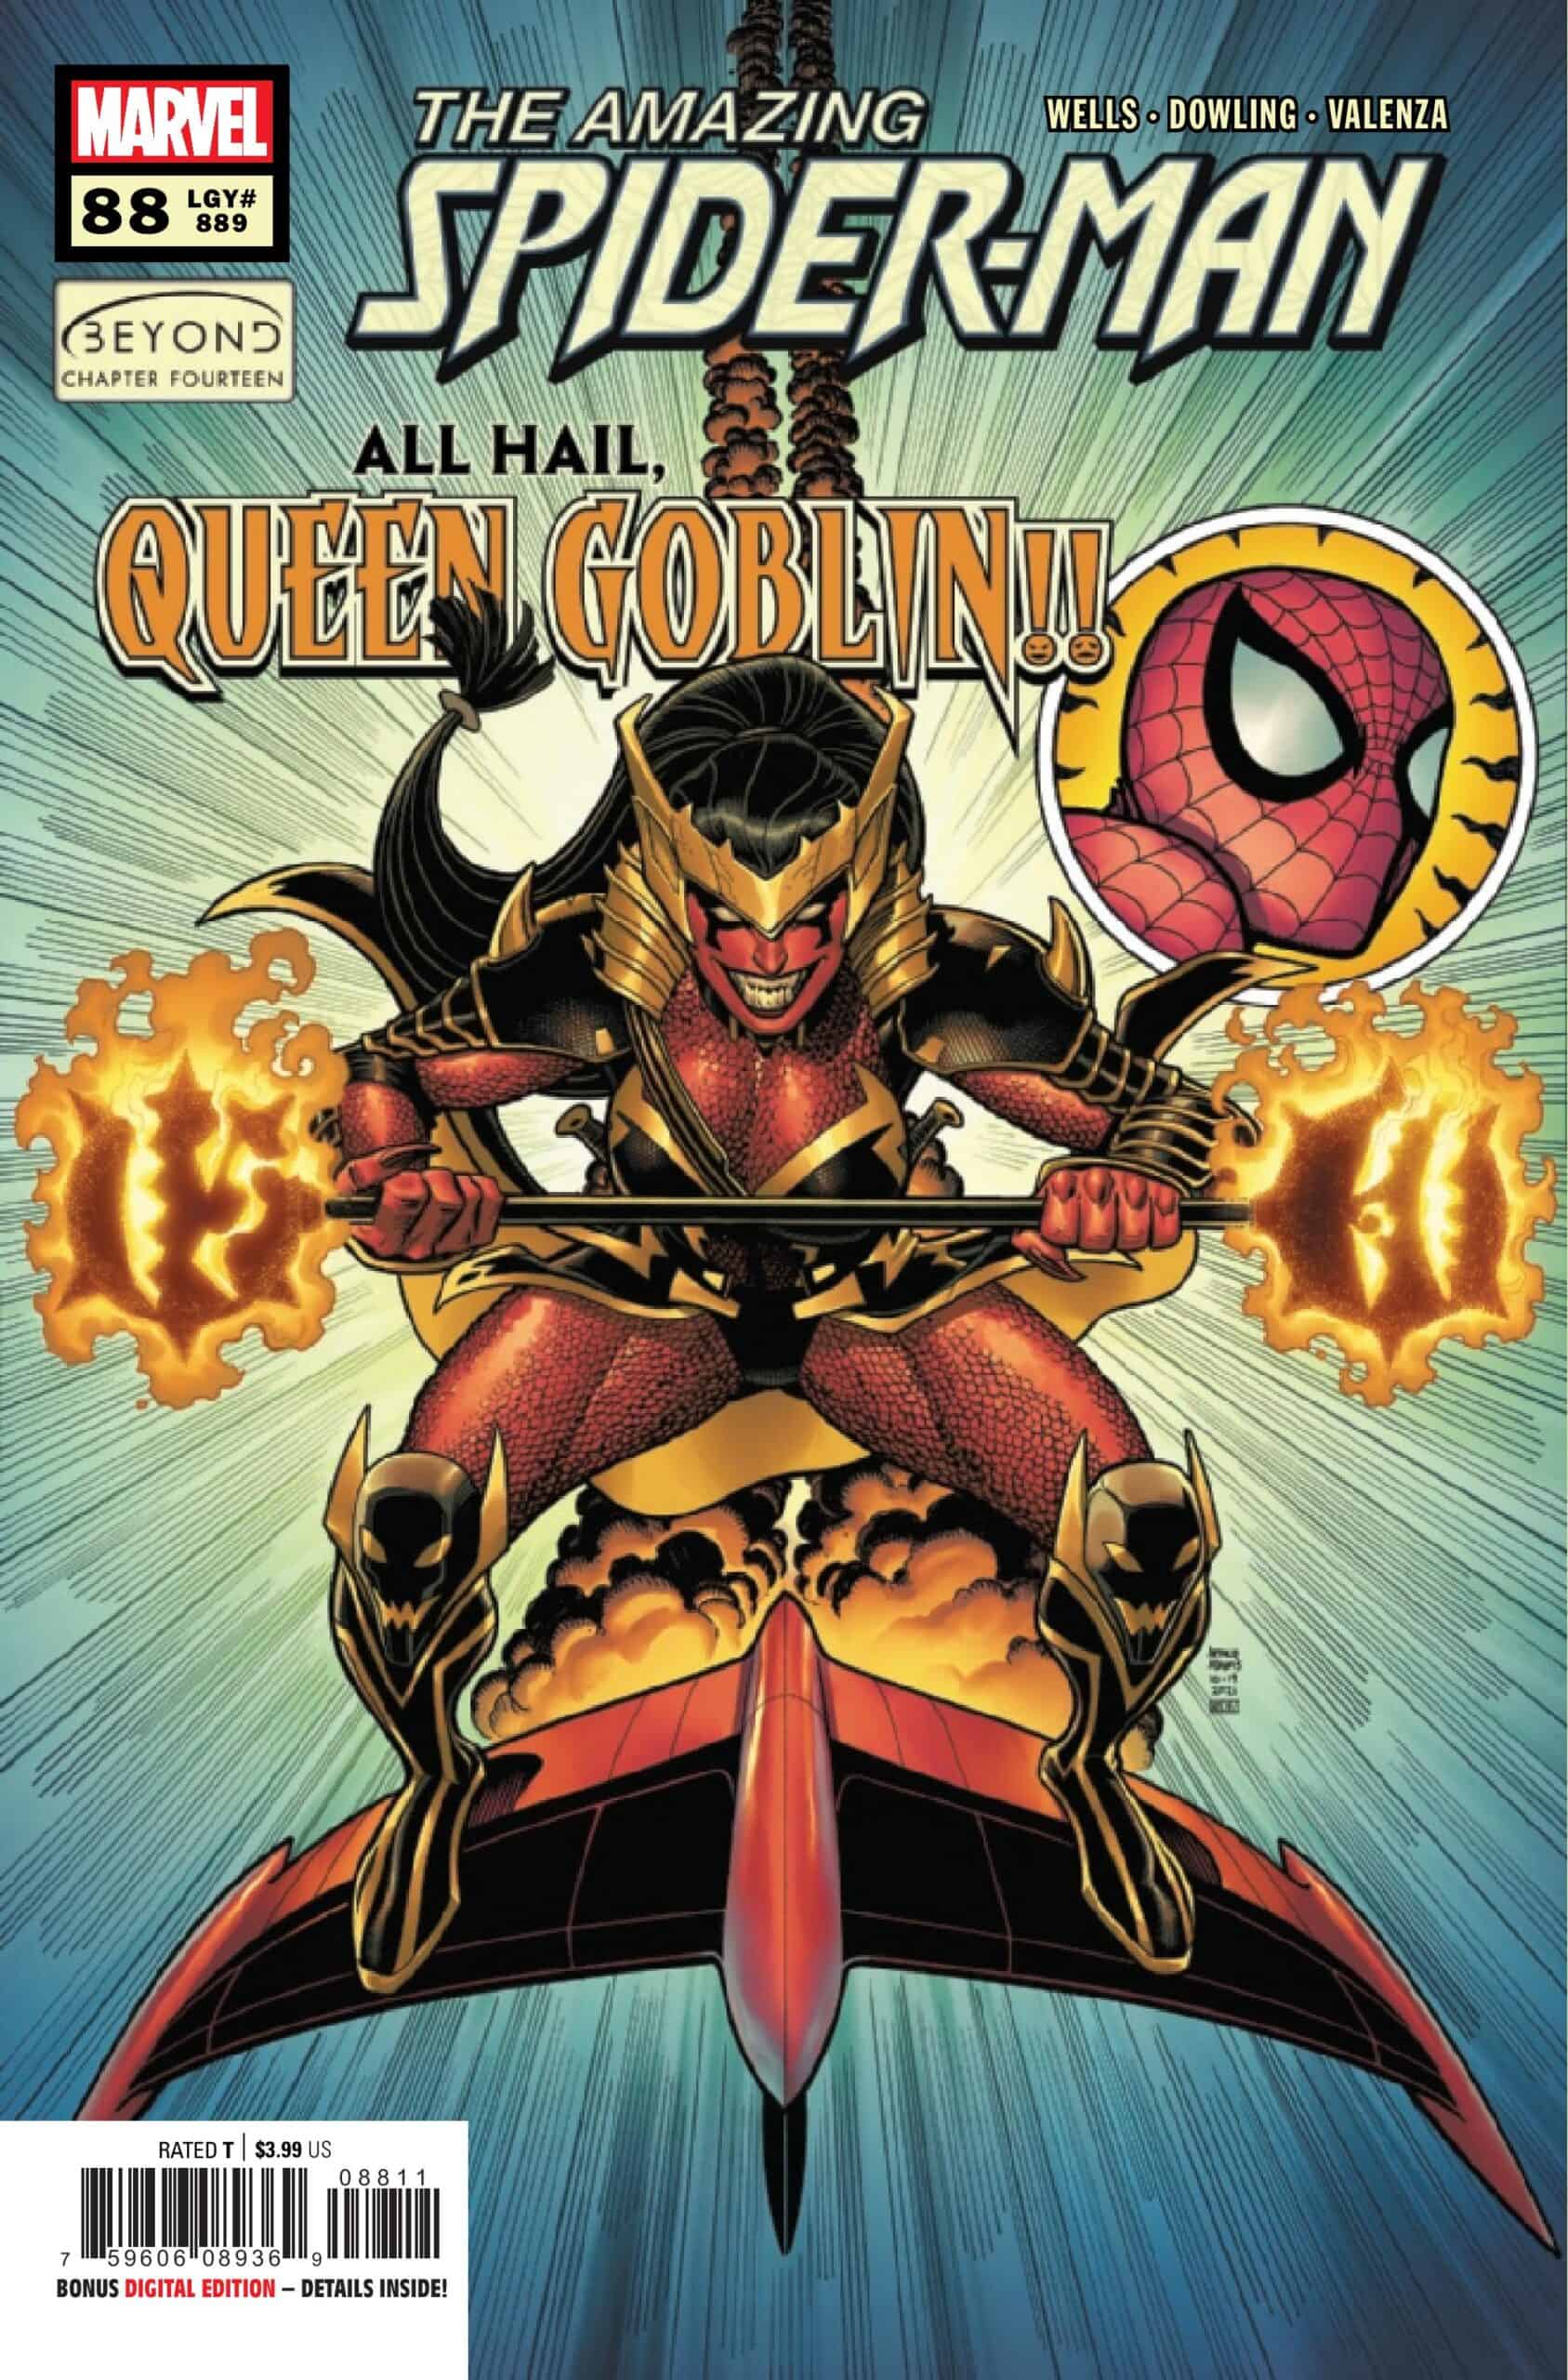 Marvel's Spider-Man REVIEW thread - 87 MC / 88 OC